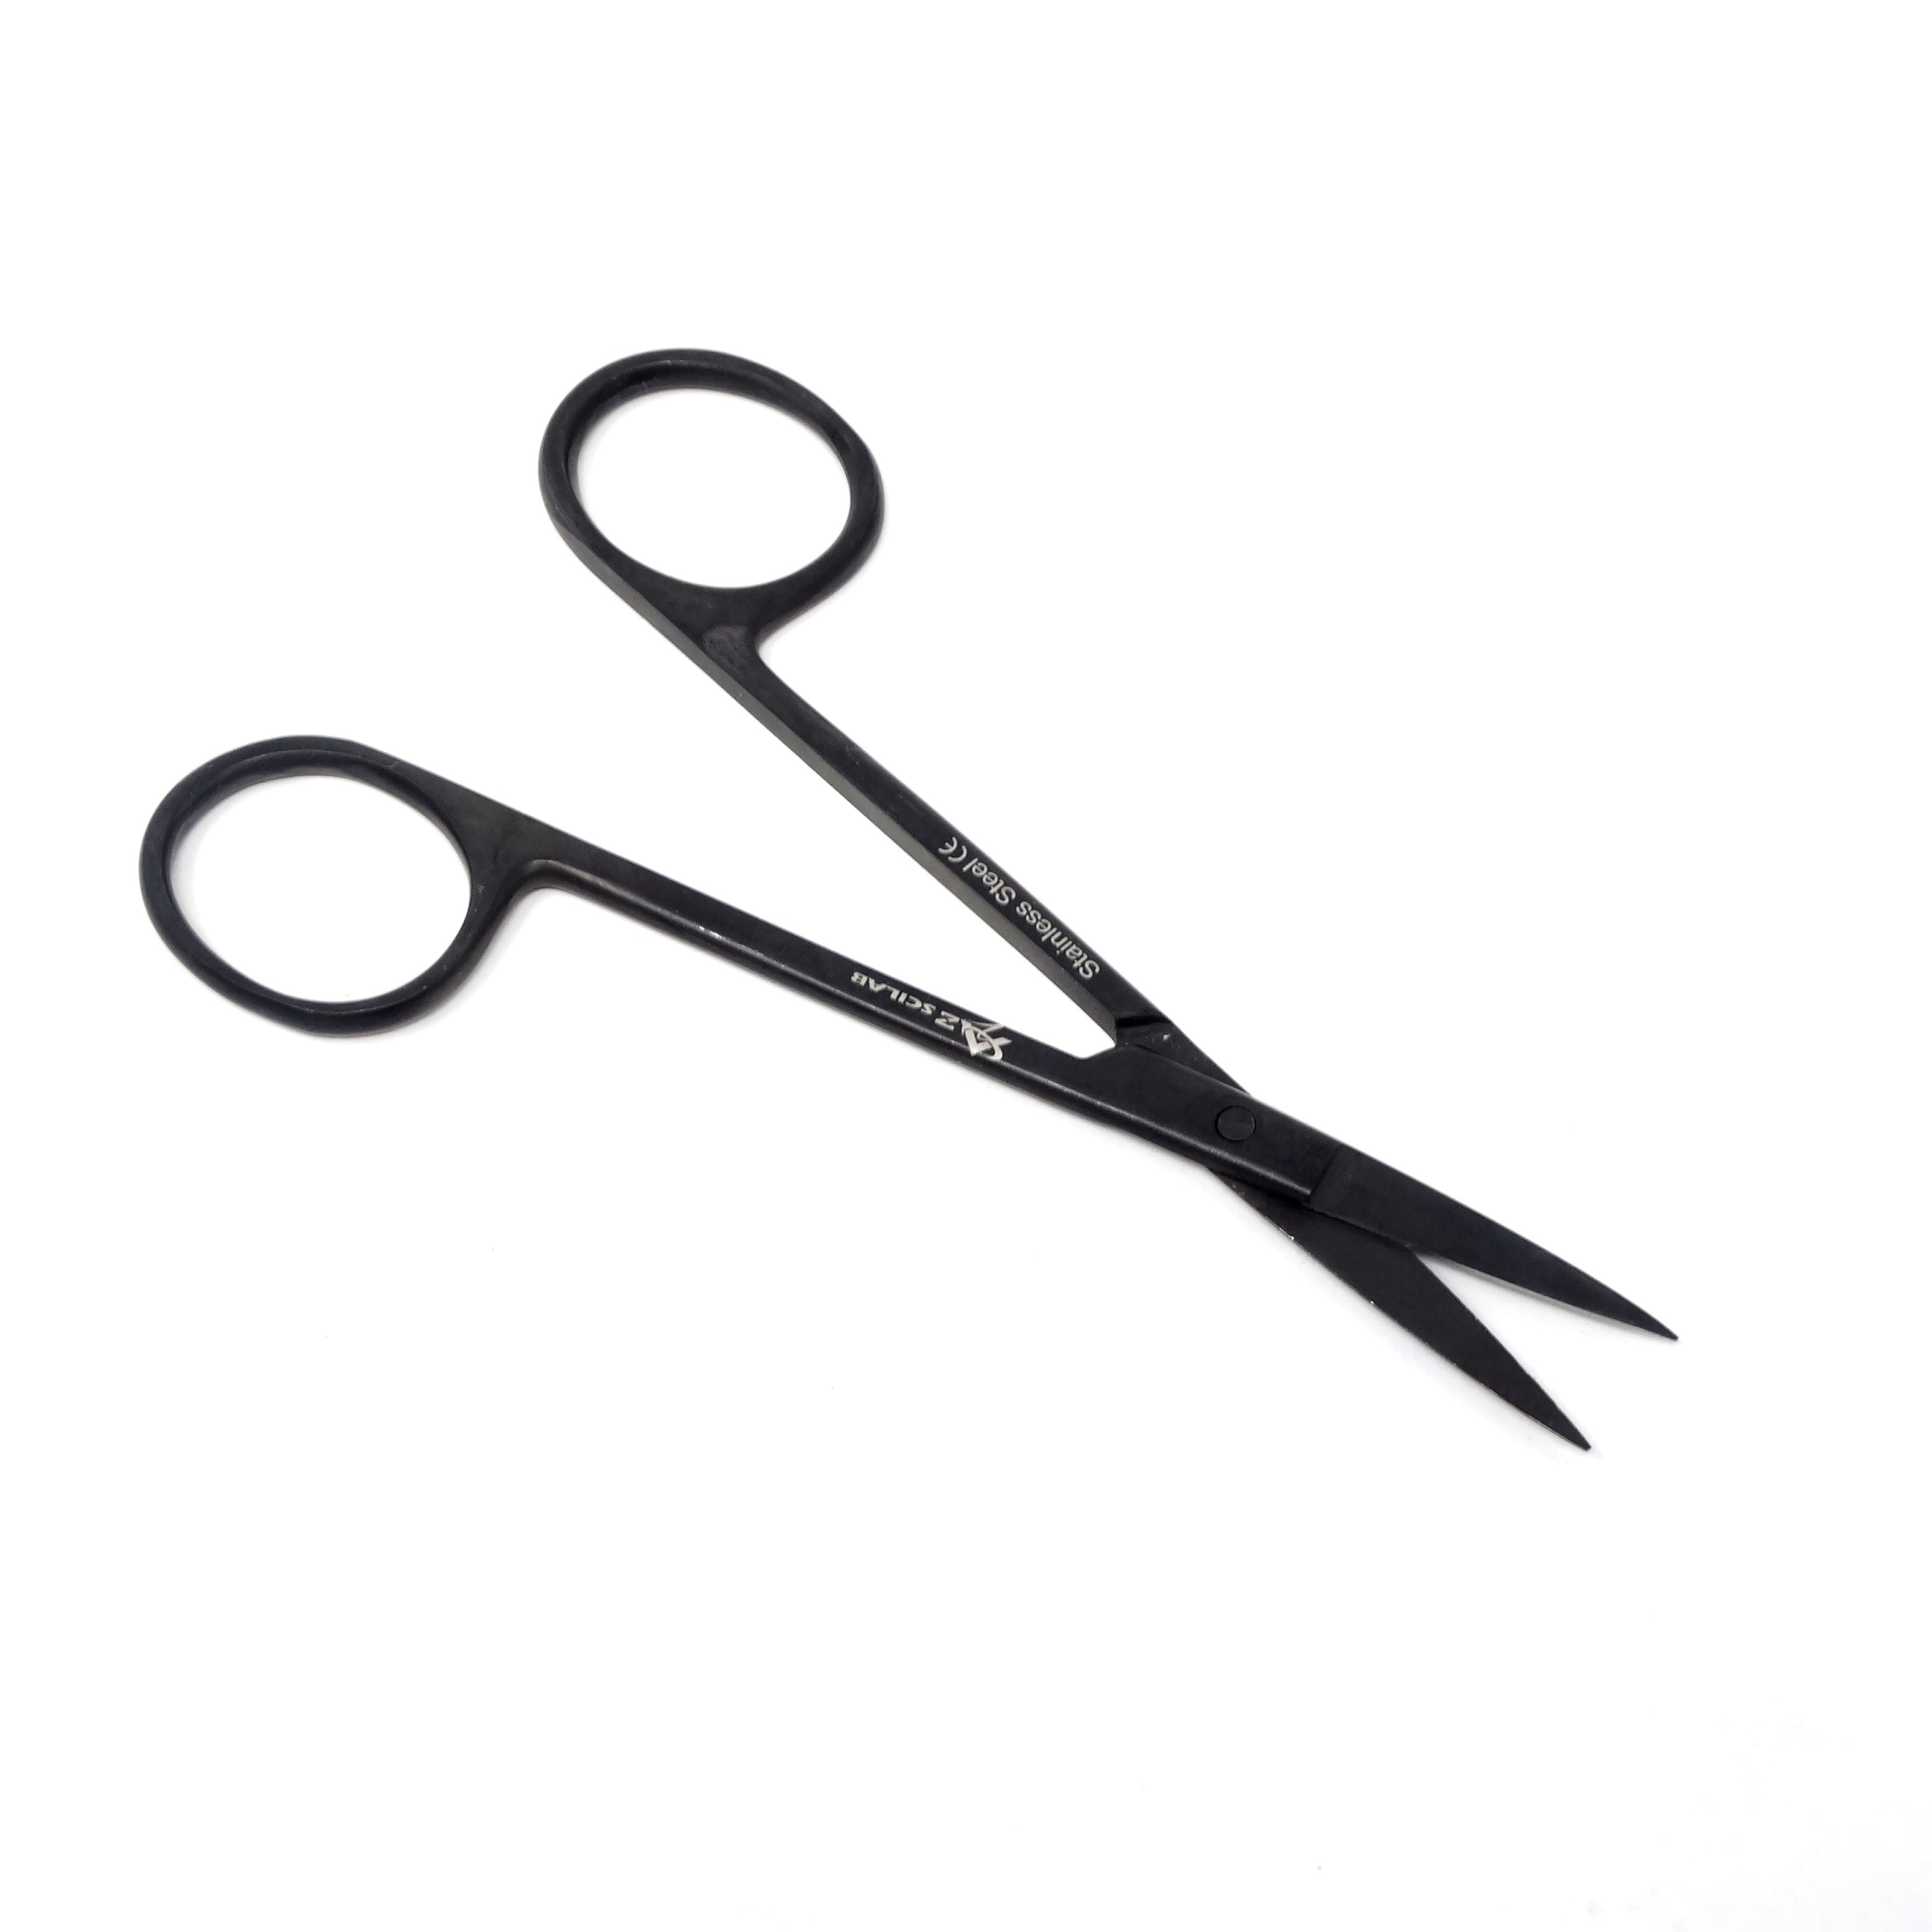 Precision cut embroidery scissors, Applique scissors